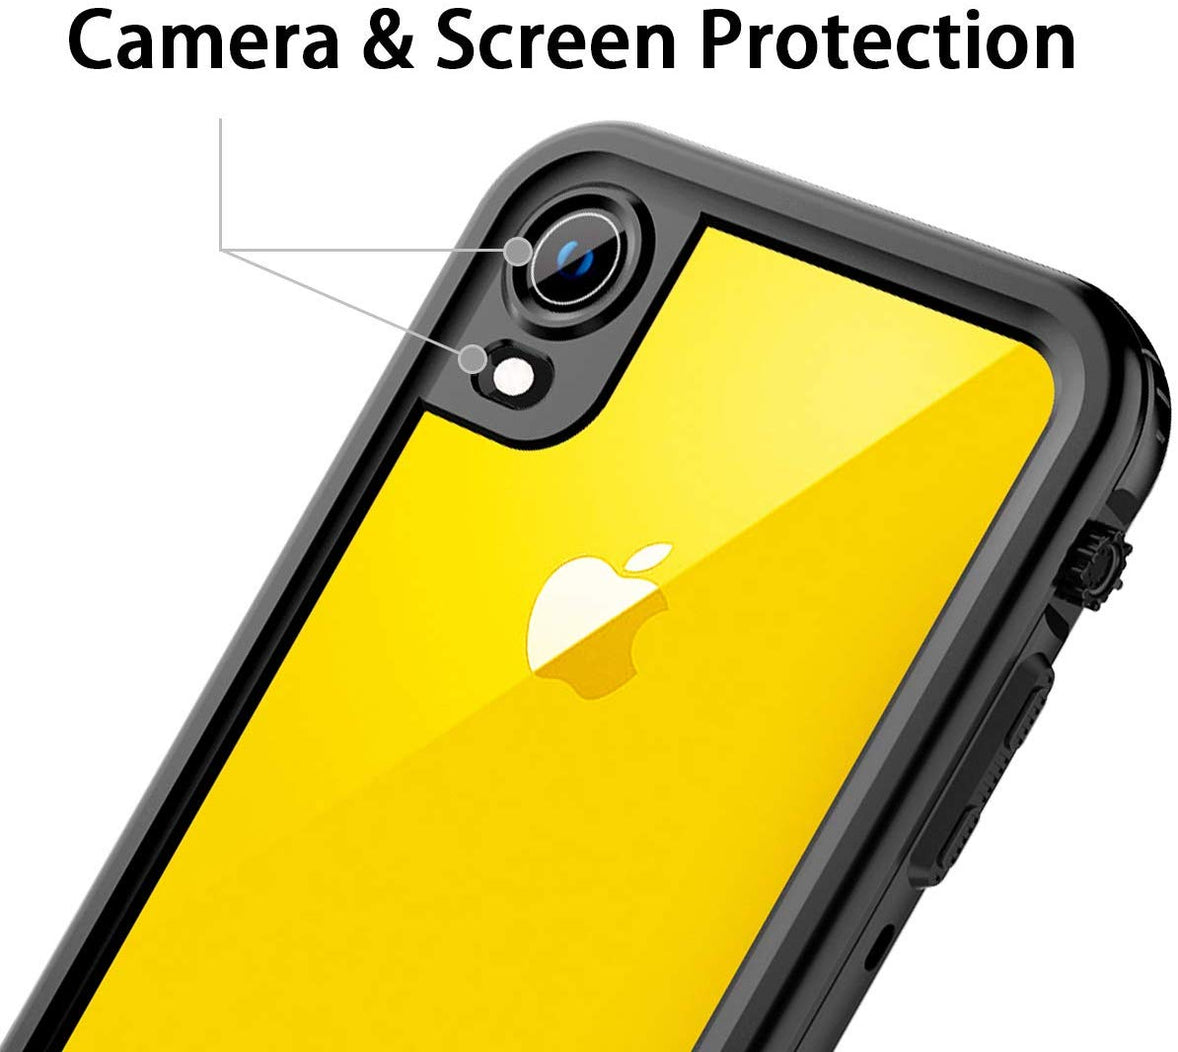 Waterproof Shockproof Dustproof Snowproof Case for iPhone XR *Free Shipping*